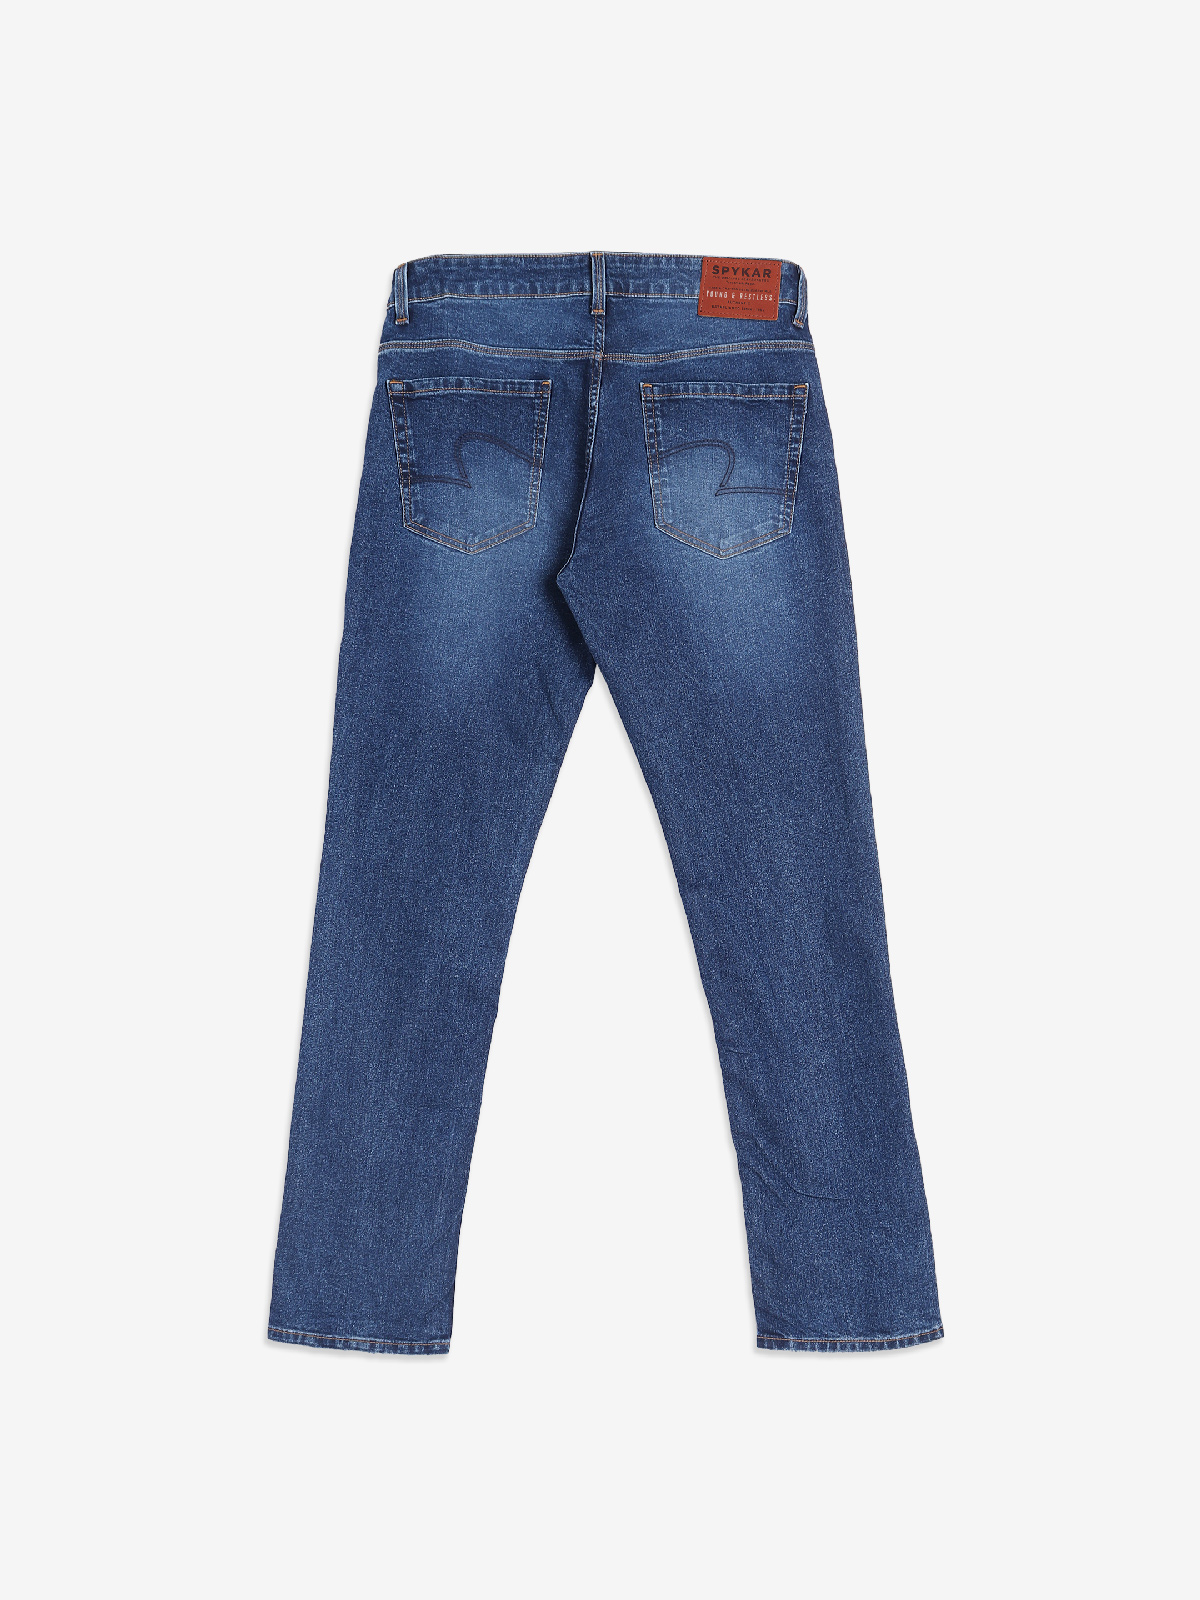 Spykar Men Vintage Blue Cotton Slim Fit Regular Length Jeans (Skinny ) -  mdact1bc089vintageblue